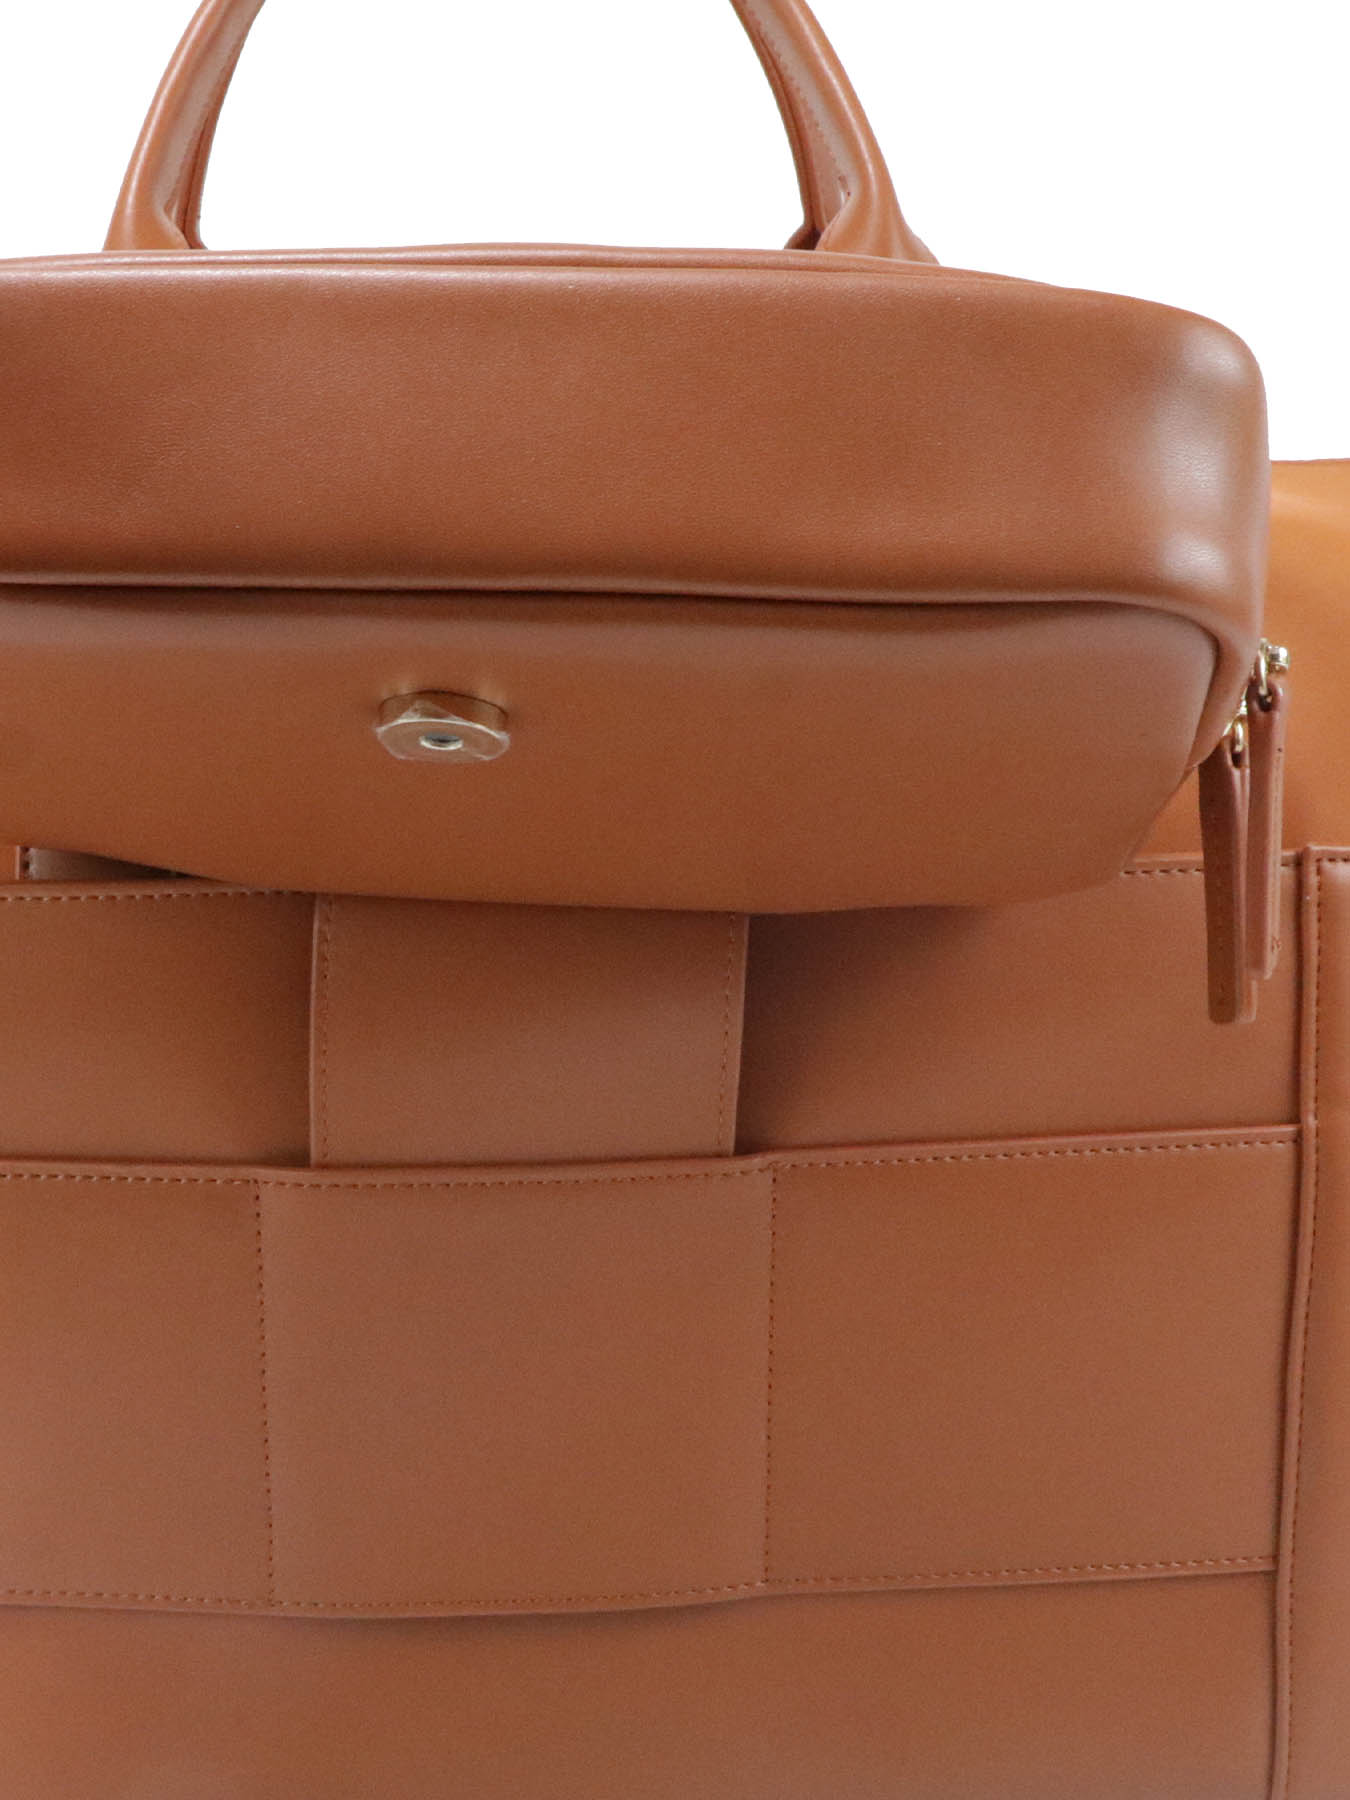 Luxury PU leather luggage bag